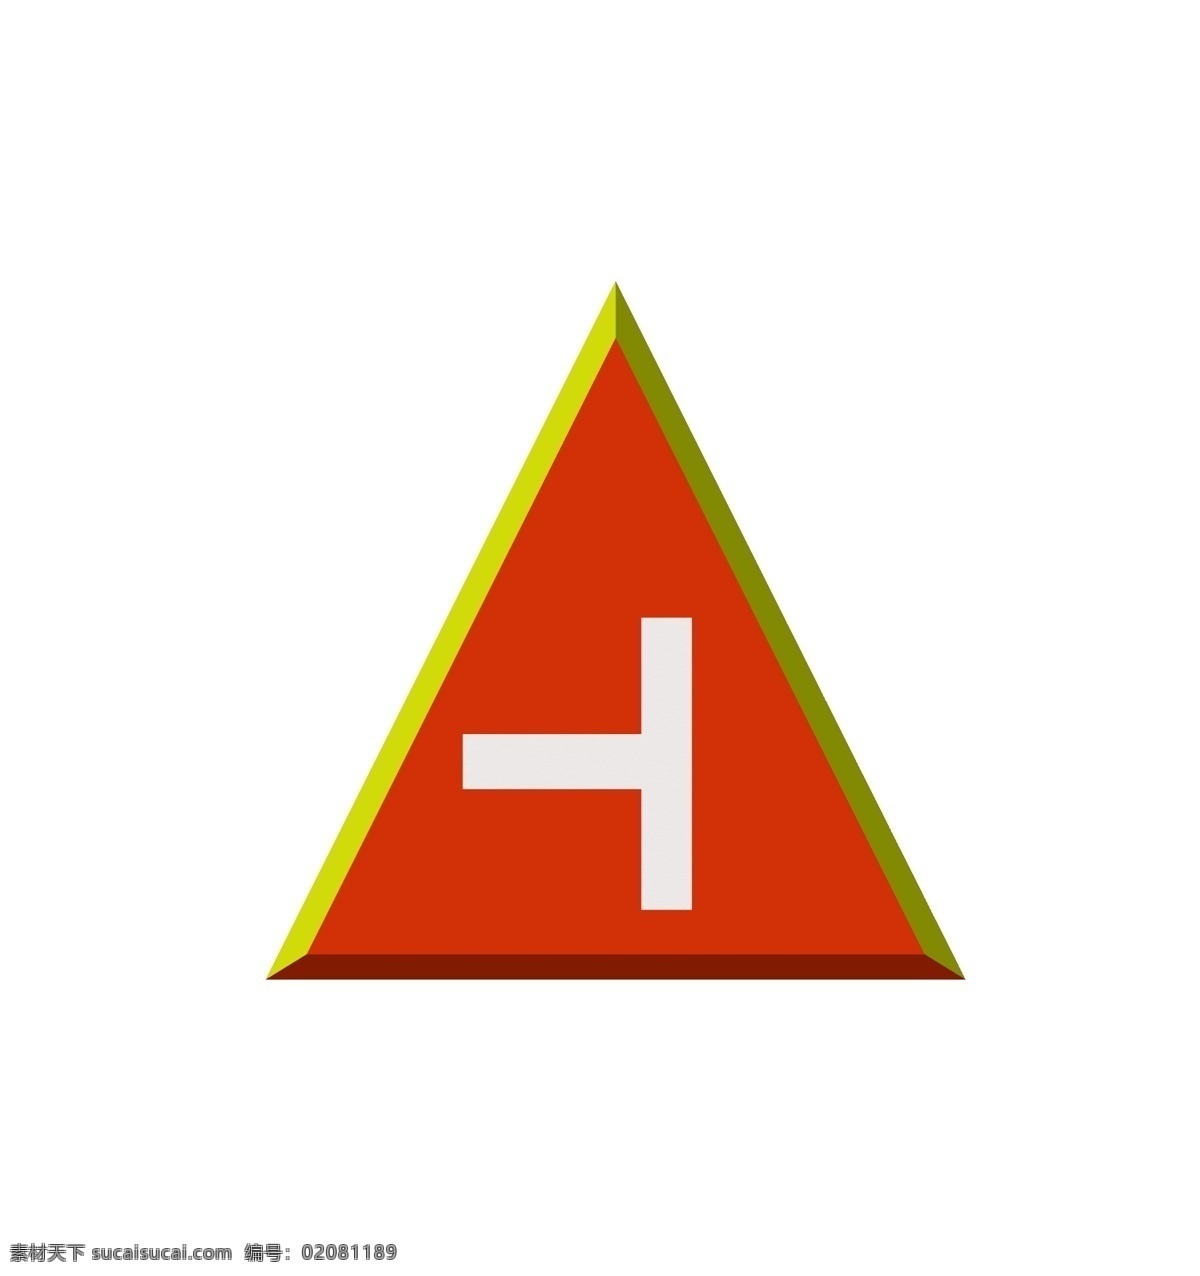 t型交叉路口 路标 图标 小 元素 矢量 交通 金色 红色底 白色标识 标志性 png免扣